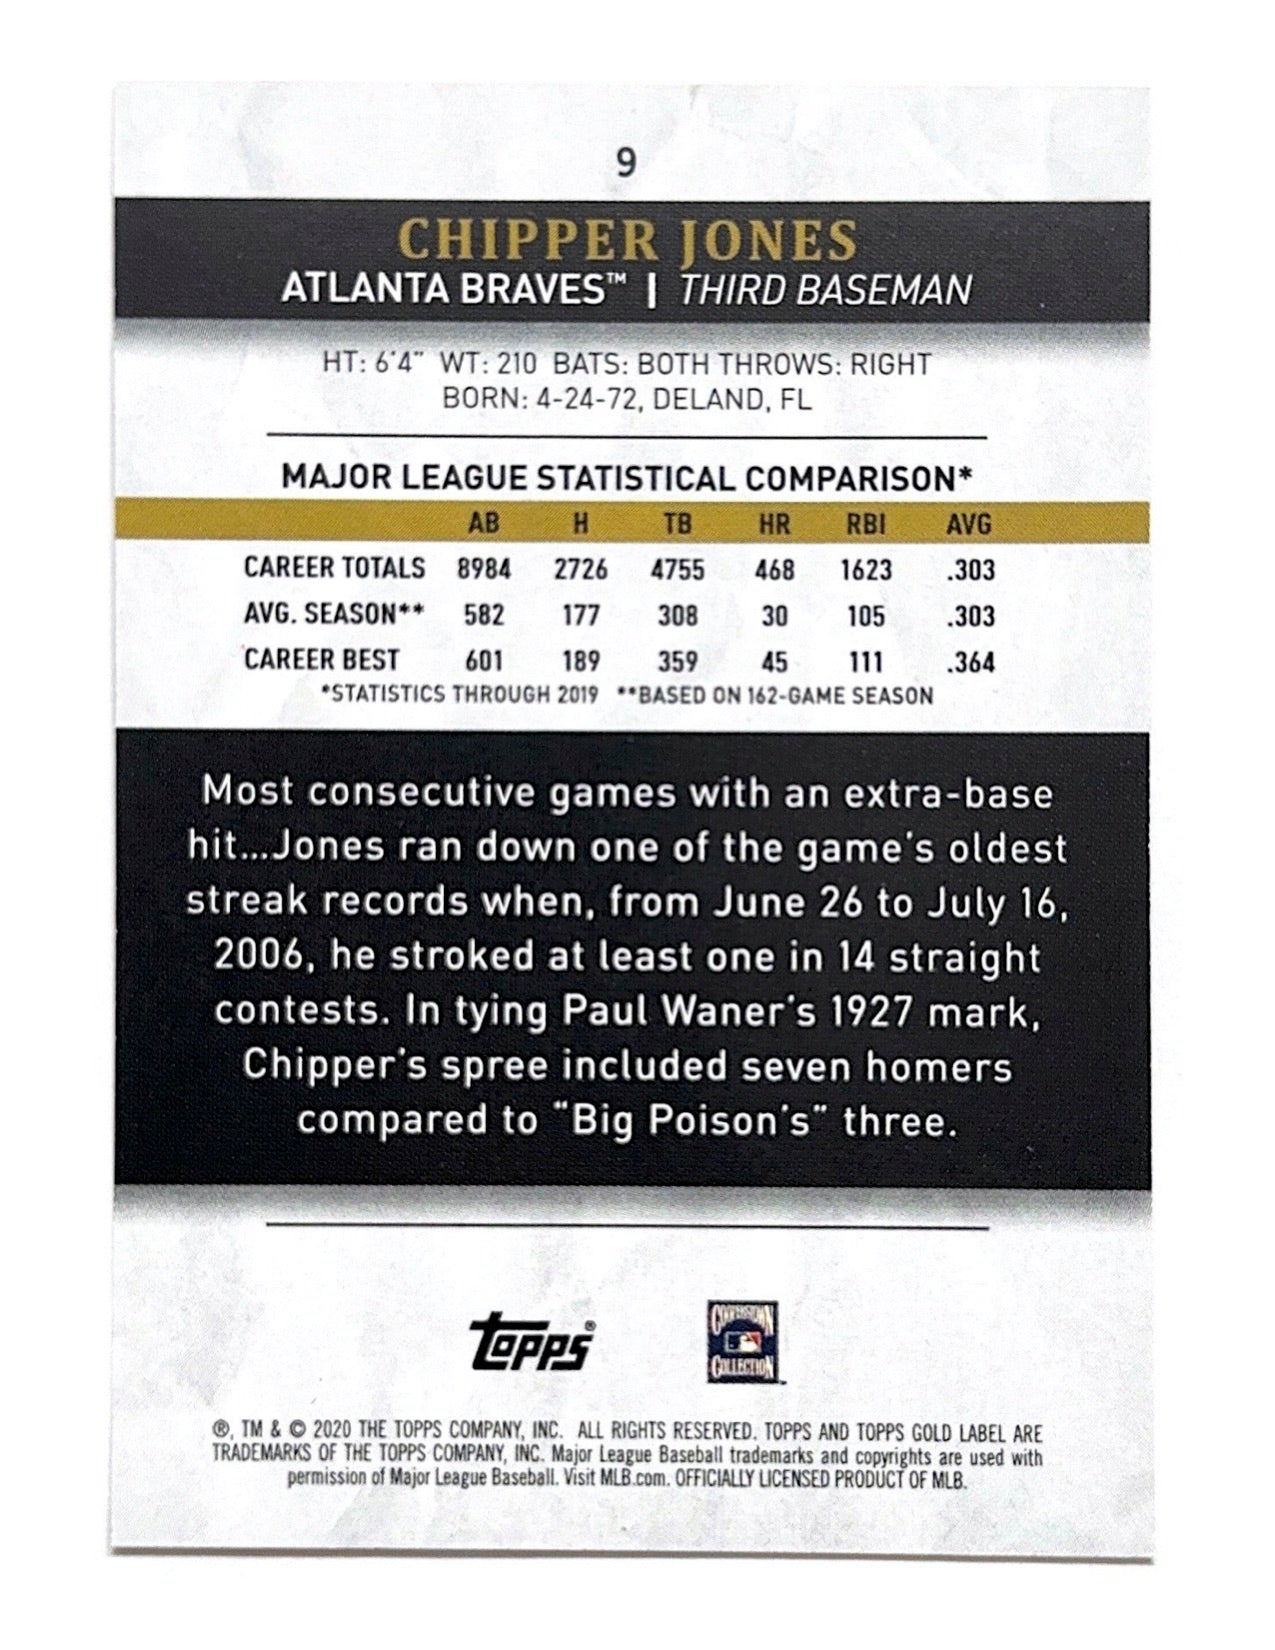 Chipper Jones 2020 Topps Gold Label Gold Refractor #9 - 1/1